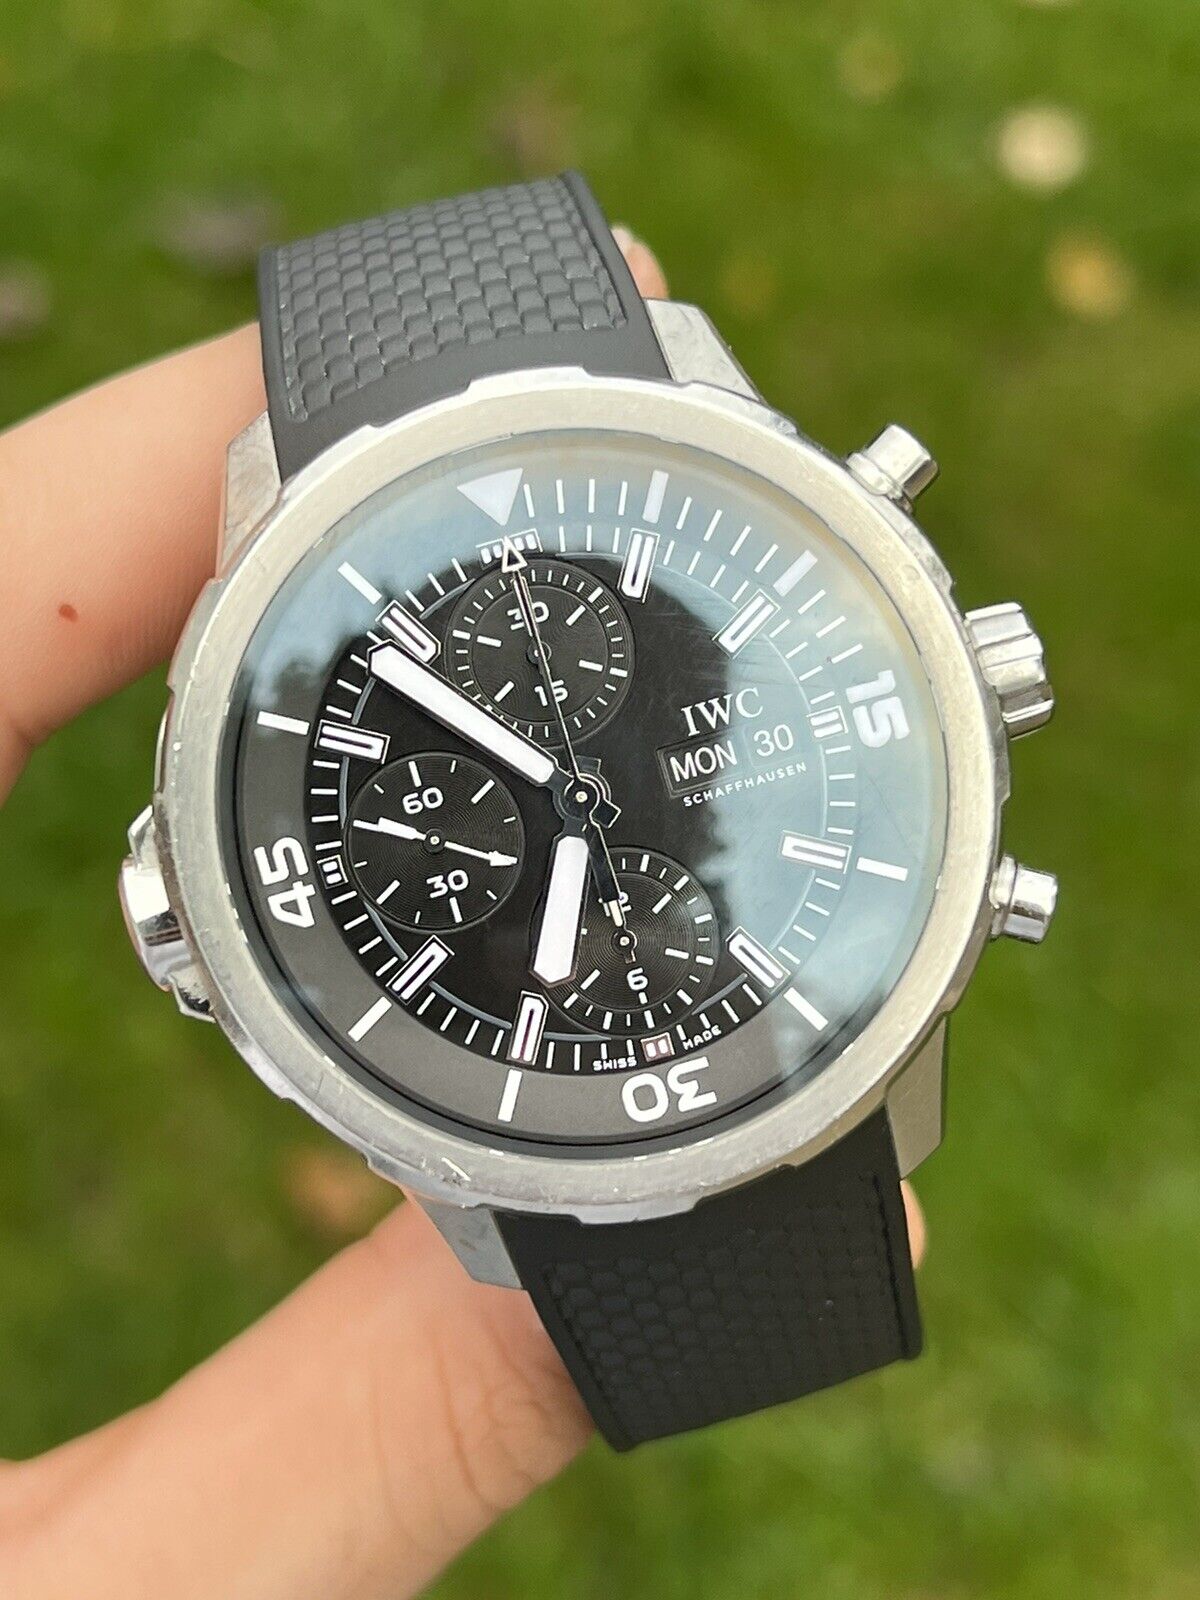 IWC Aquatimer Chronograph Black Dial Black Leather Strap Watch for Men - IW376803